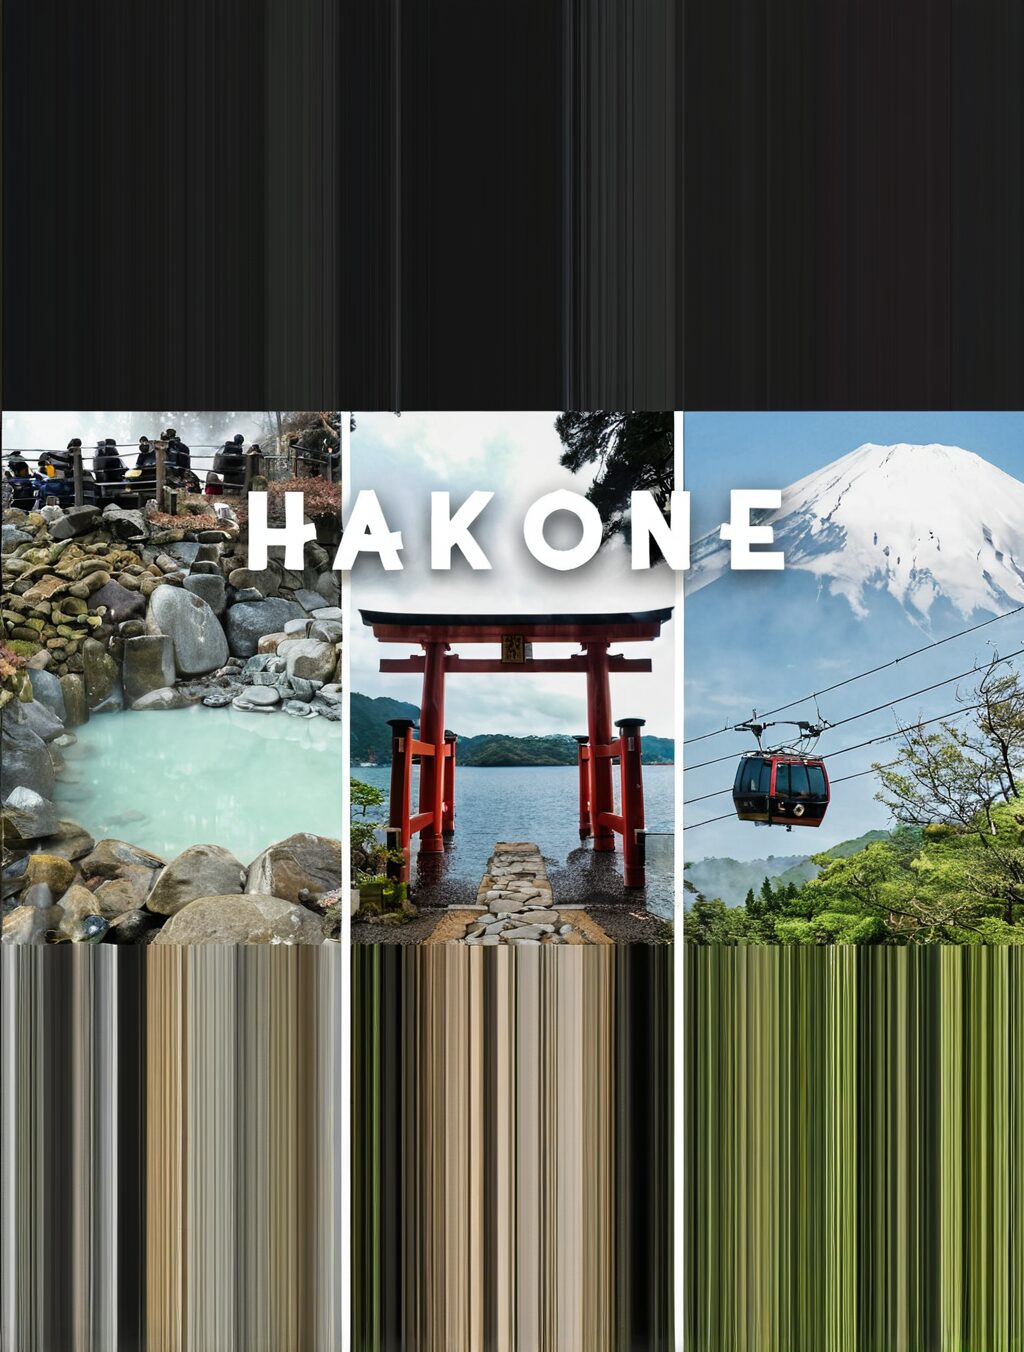 hakone itinerary japan guide